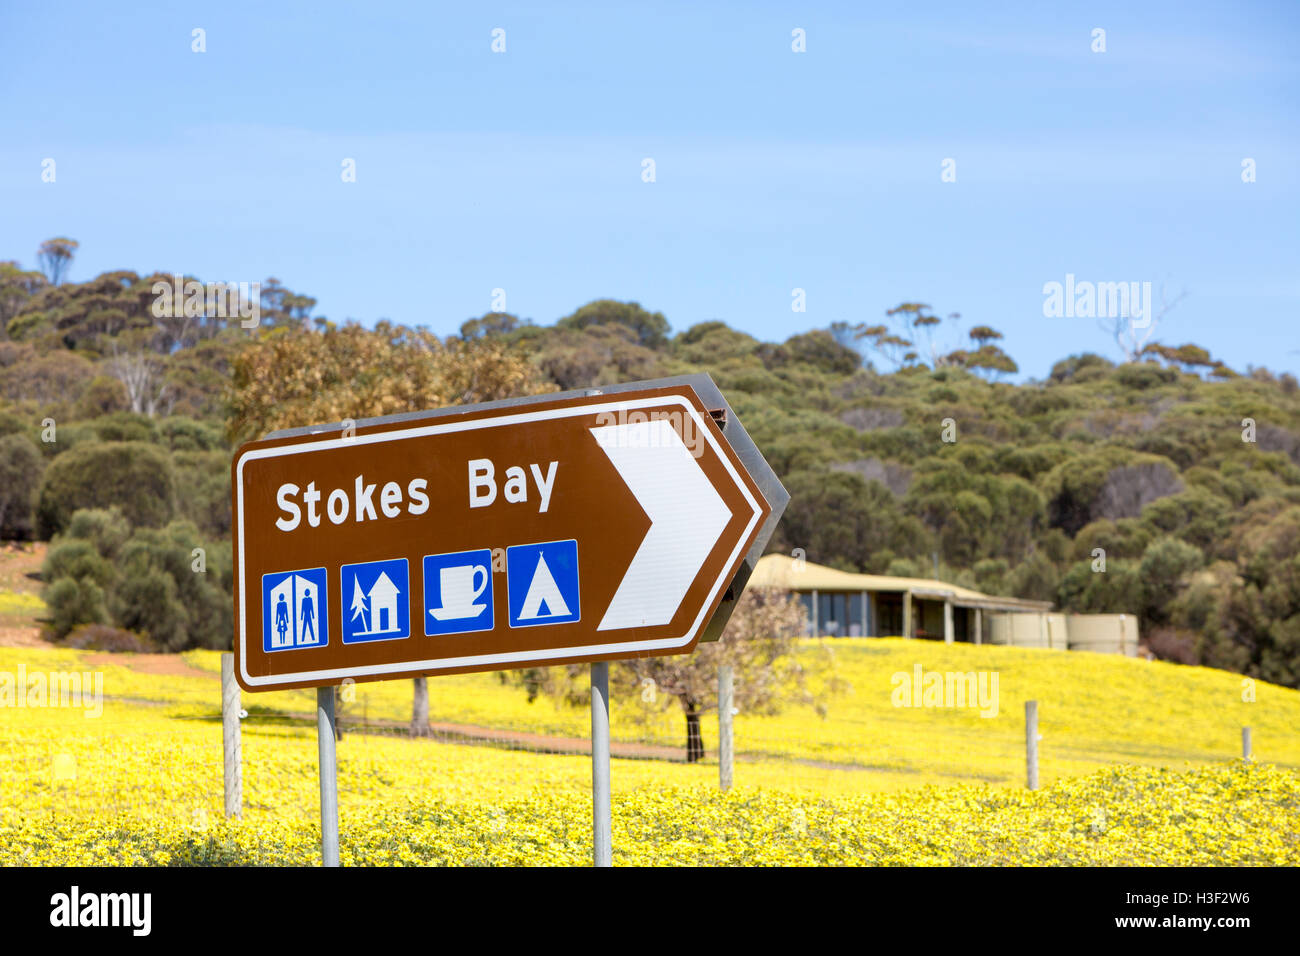 Road sign for Stokes Bay with logos for facilities, Kangaroo Island,South Australia Stock Photo